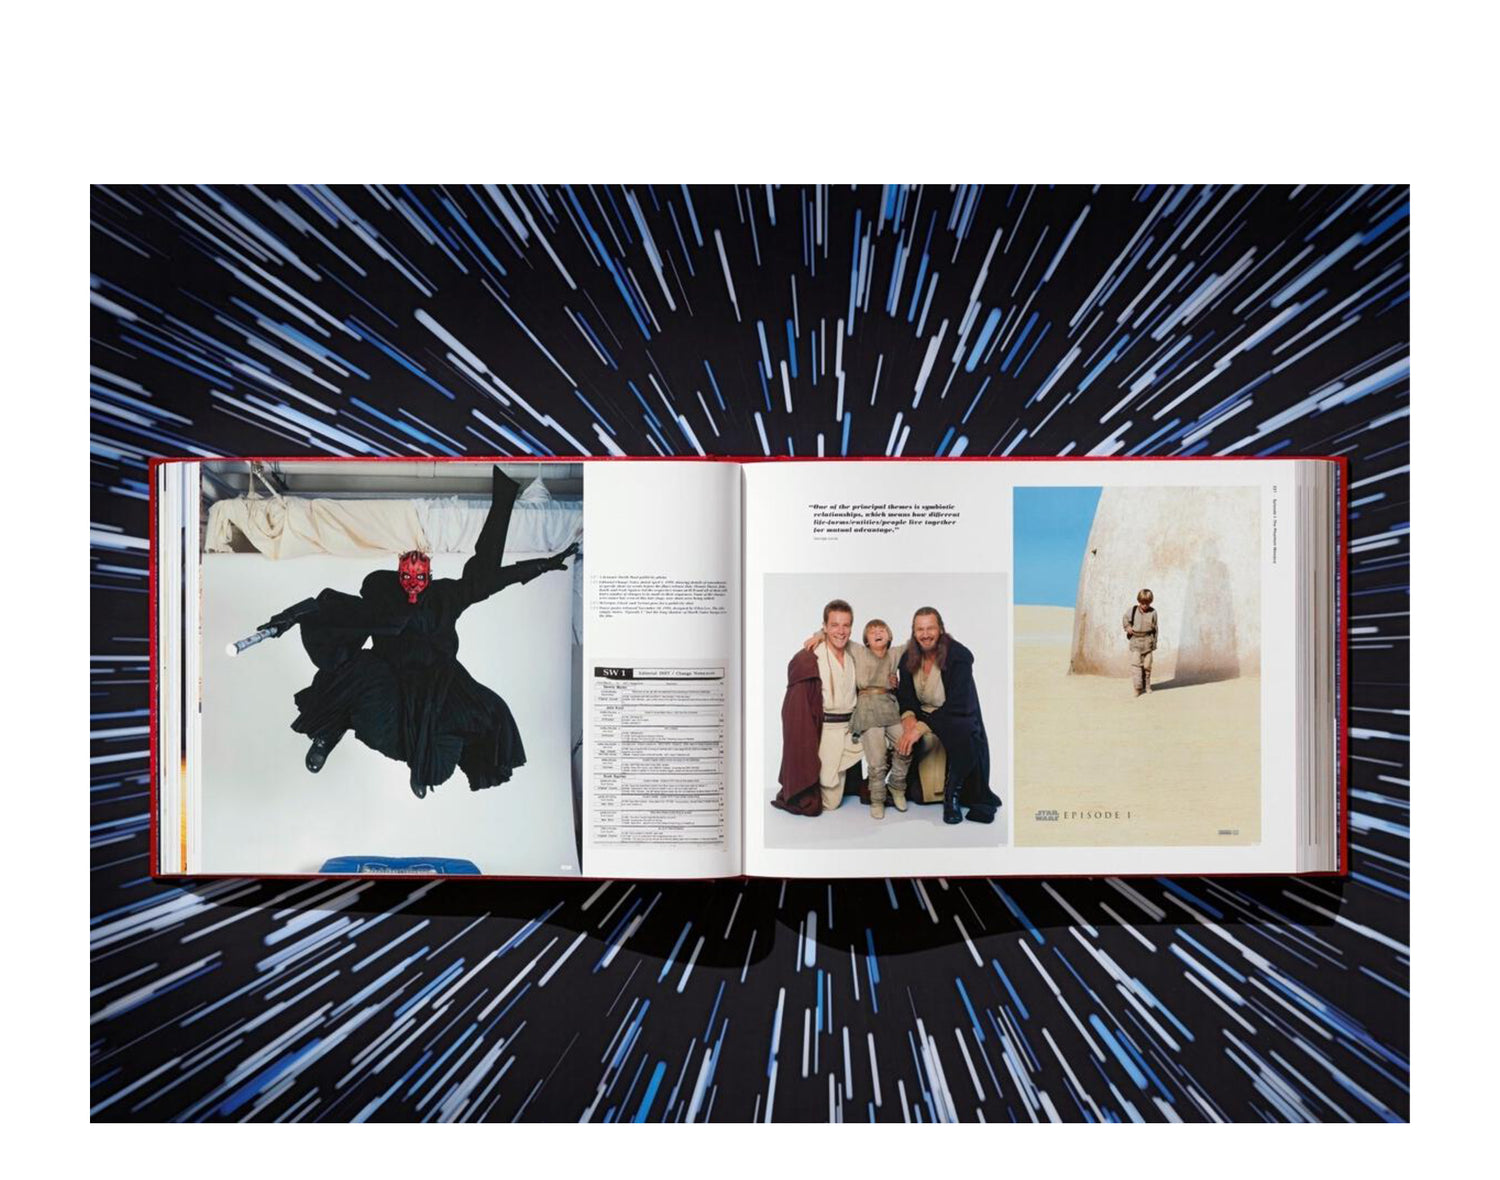 Taschen Books - The Star Wars Archives - 1999-2005 Hardcover Book